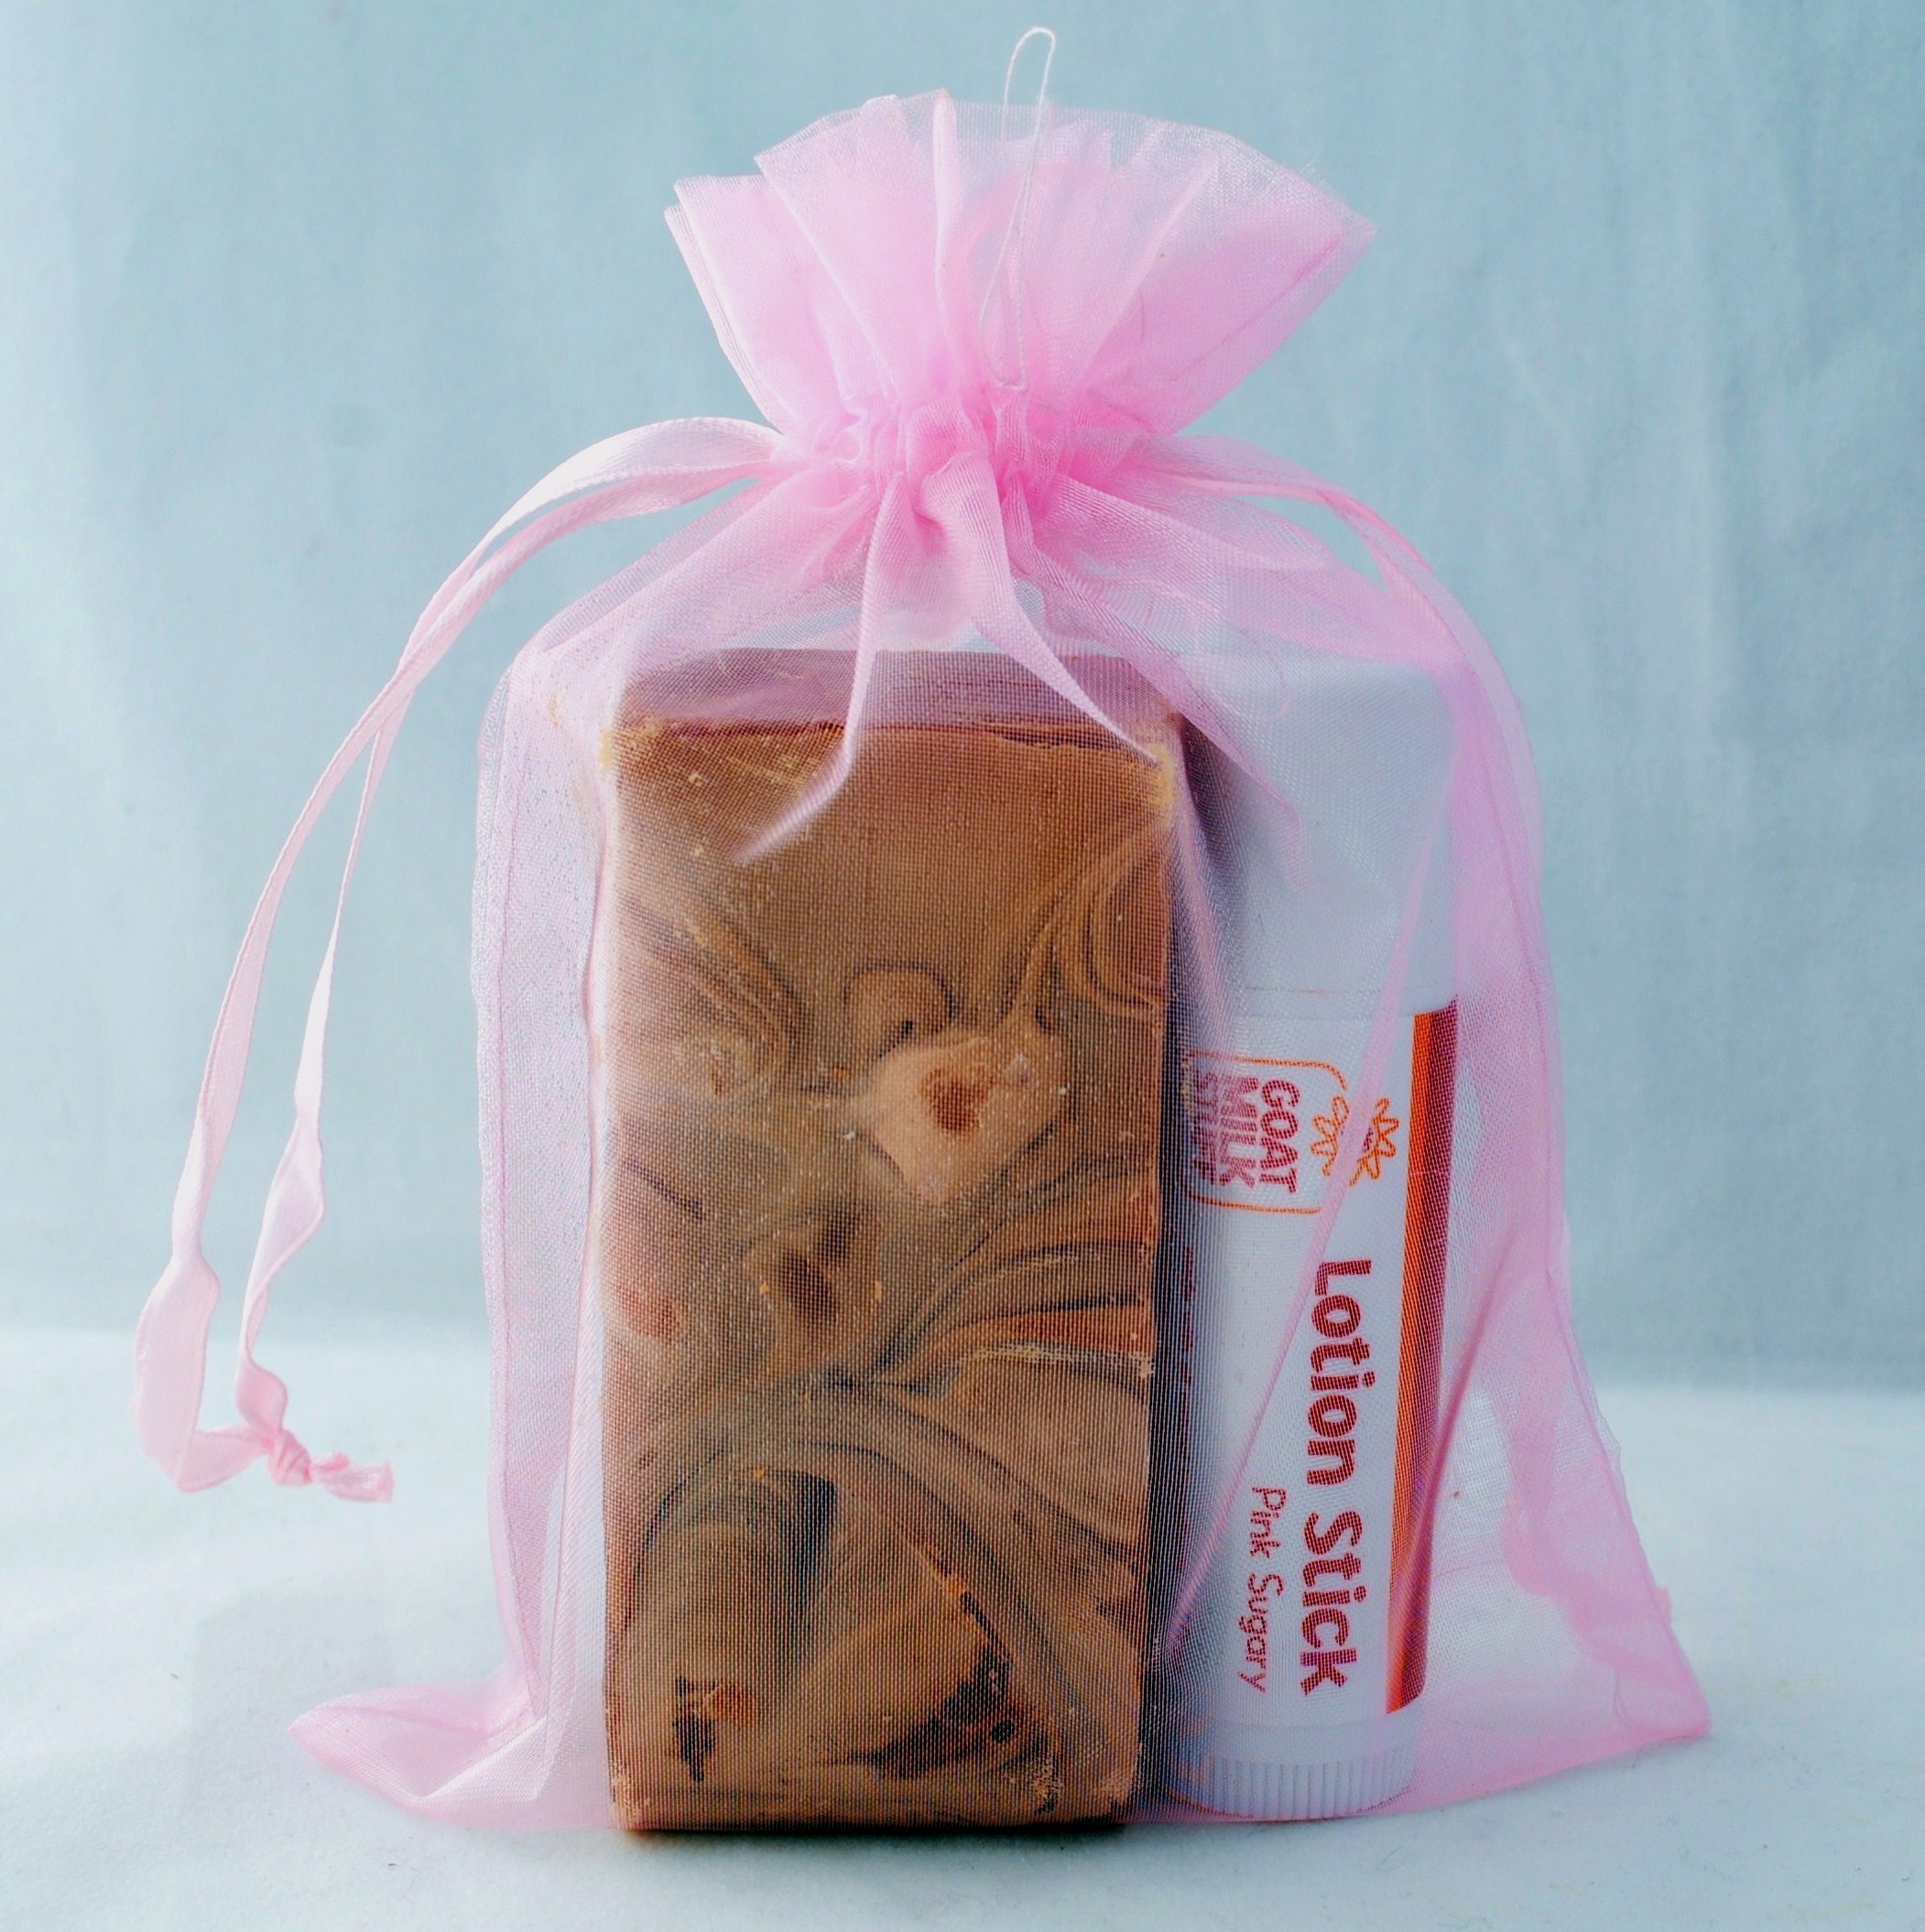 Goat Milk Stuff gift packs, such as goat milk soap & lotion, are presents that pamper & moisten skin